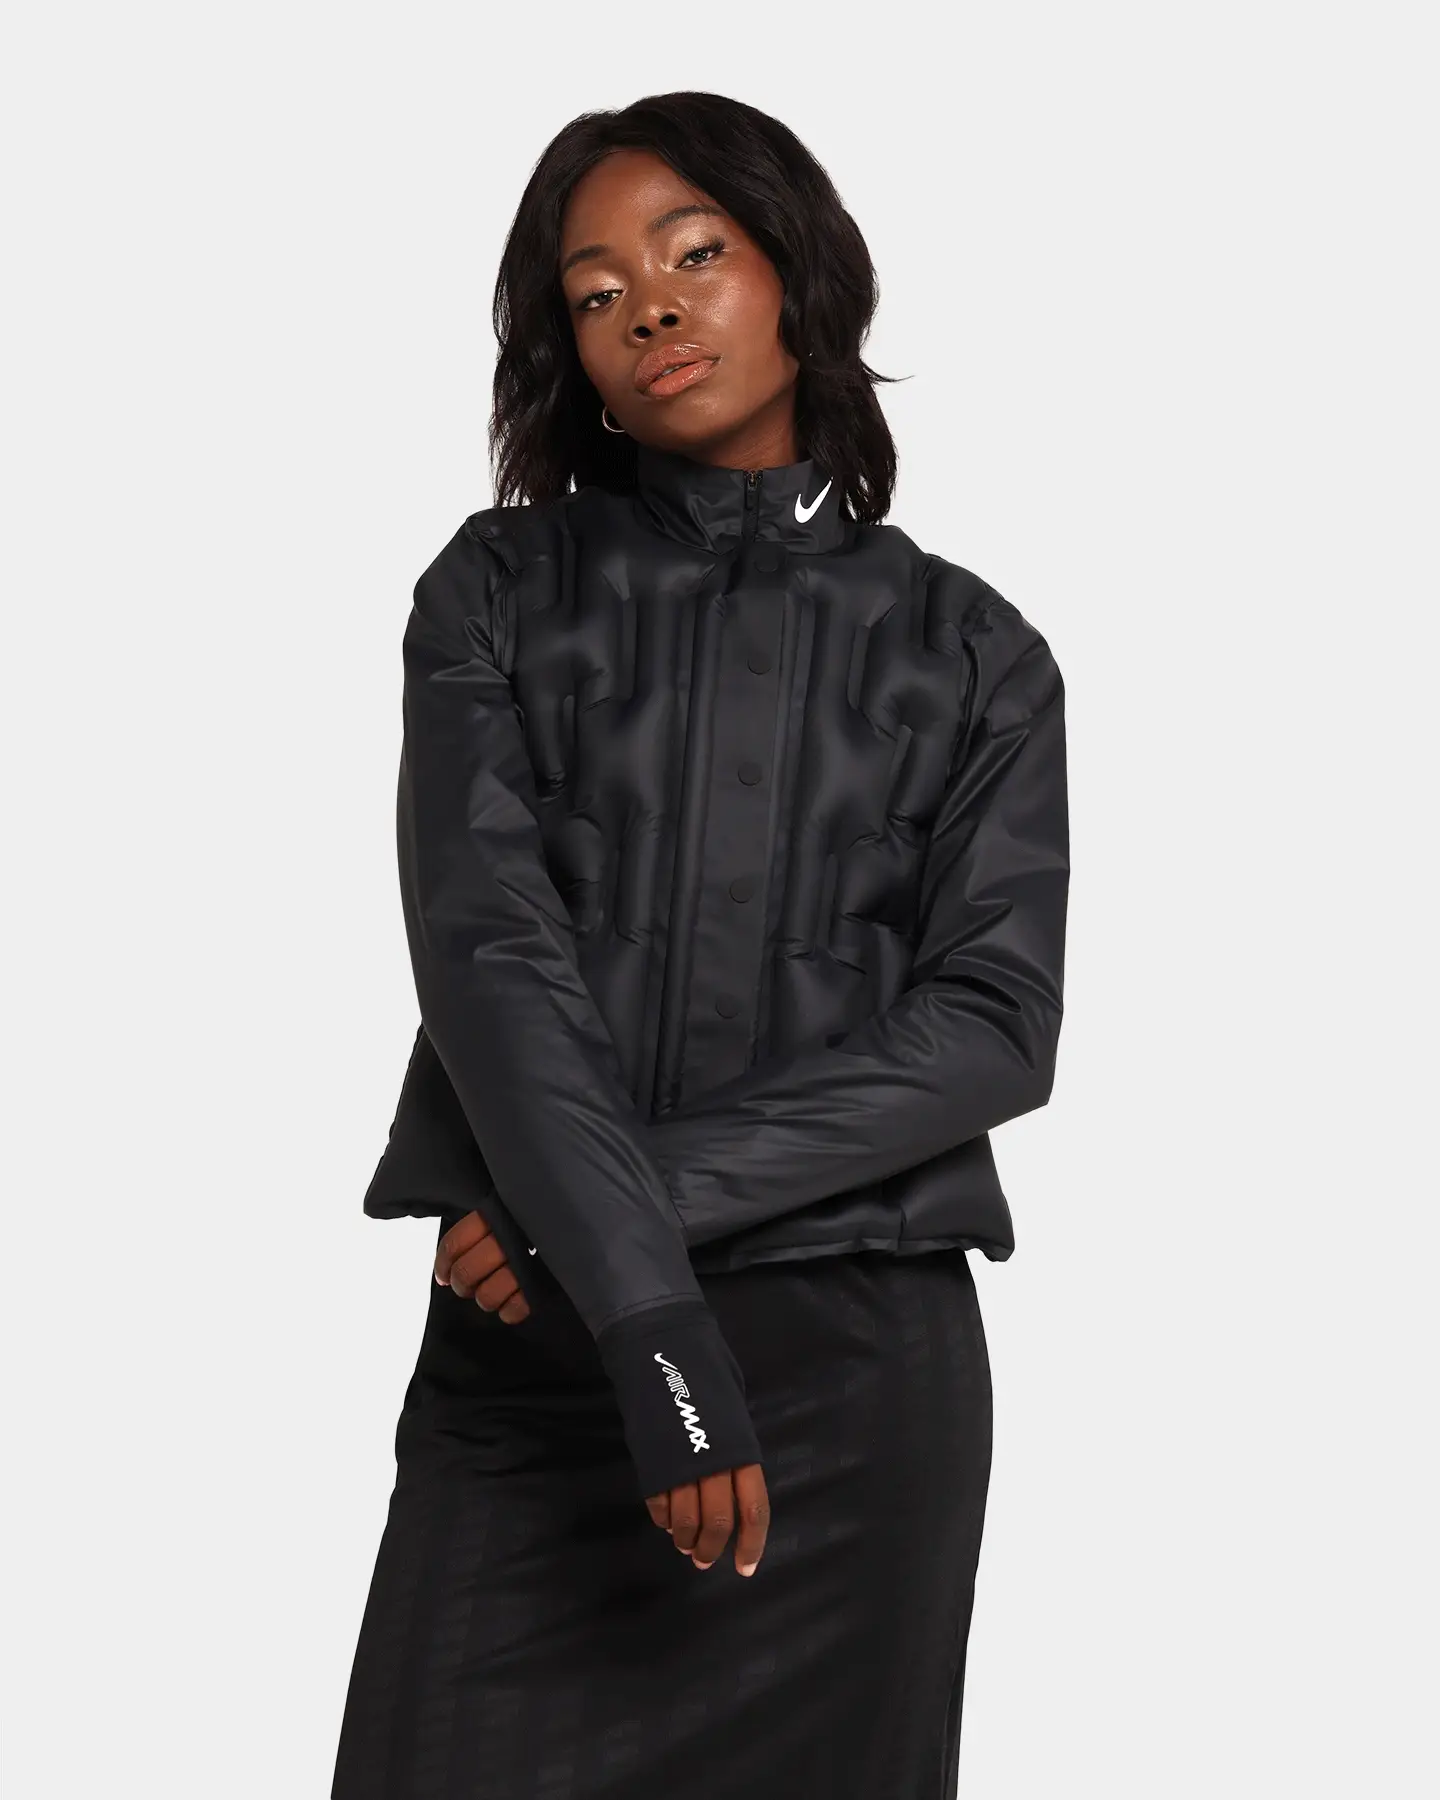 Nike Women's Nike Sportswear Inflatable Jacket Black - Size 6 (XS)